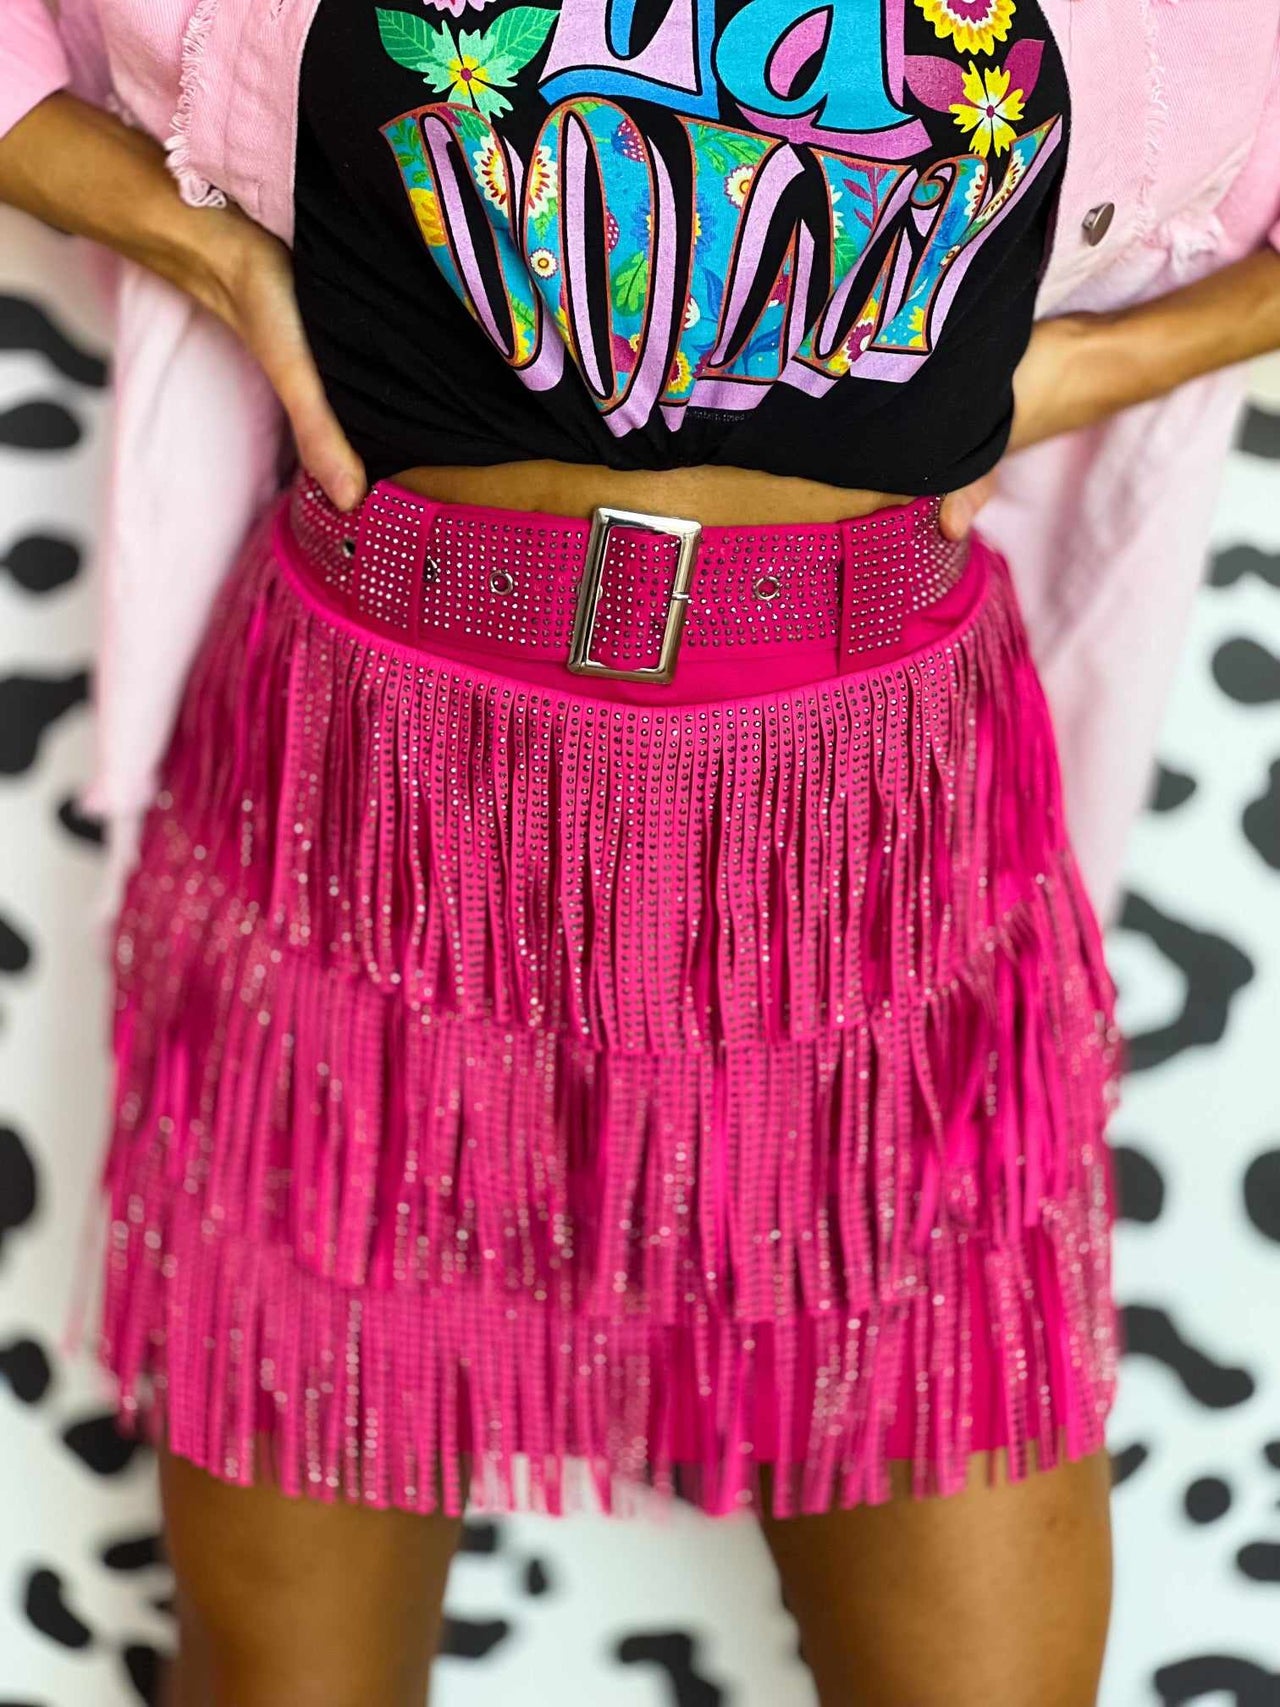 Pink mini skirt with fringe.